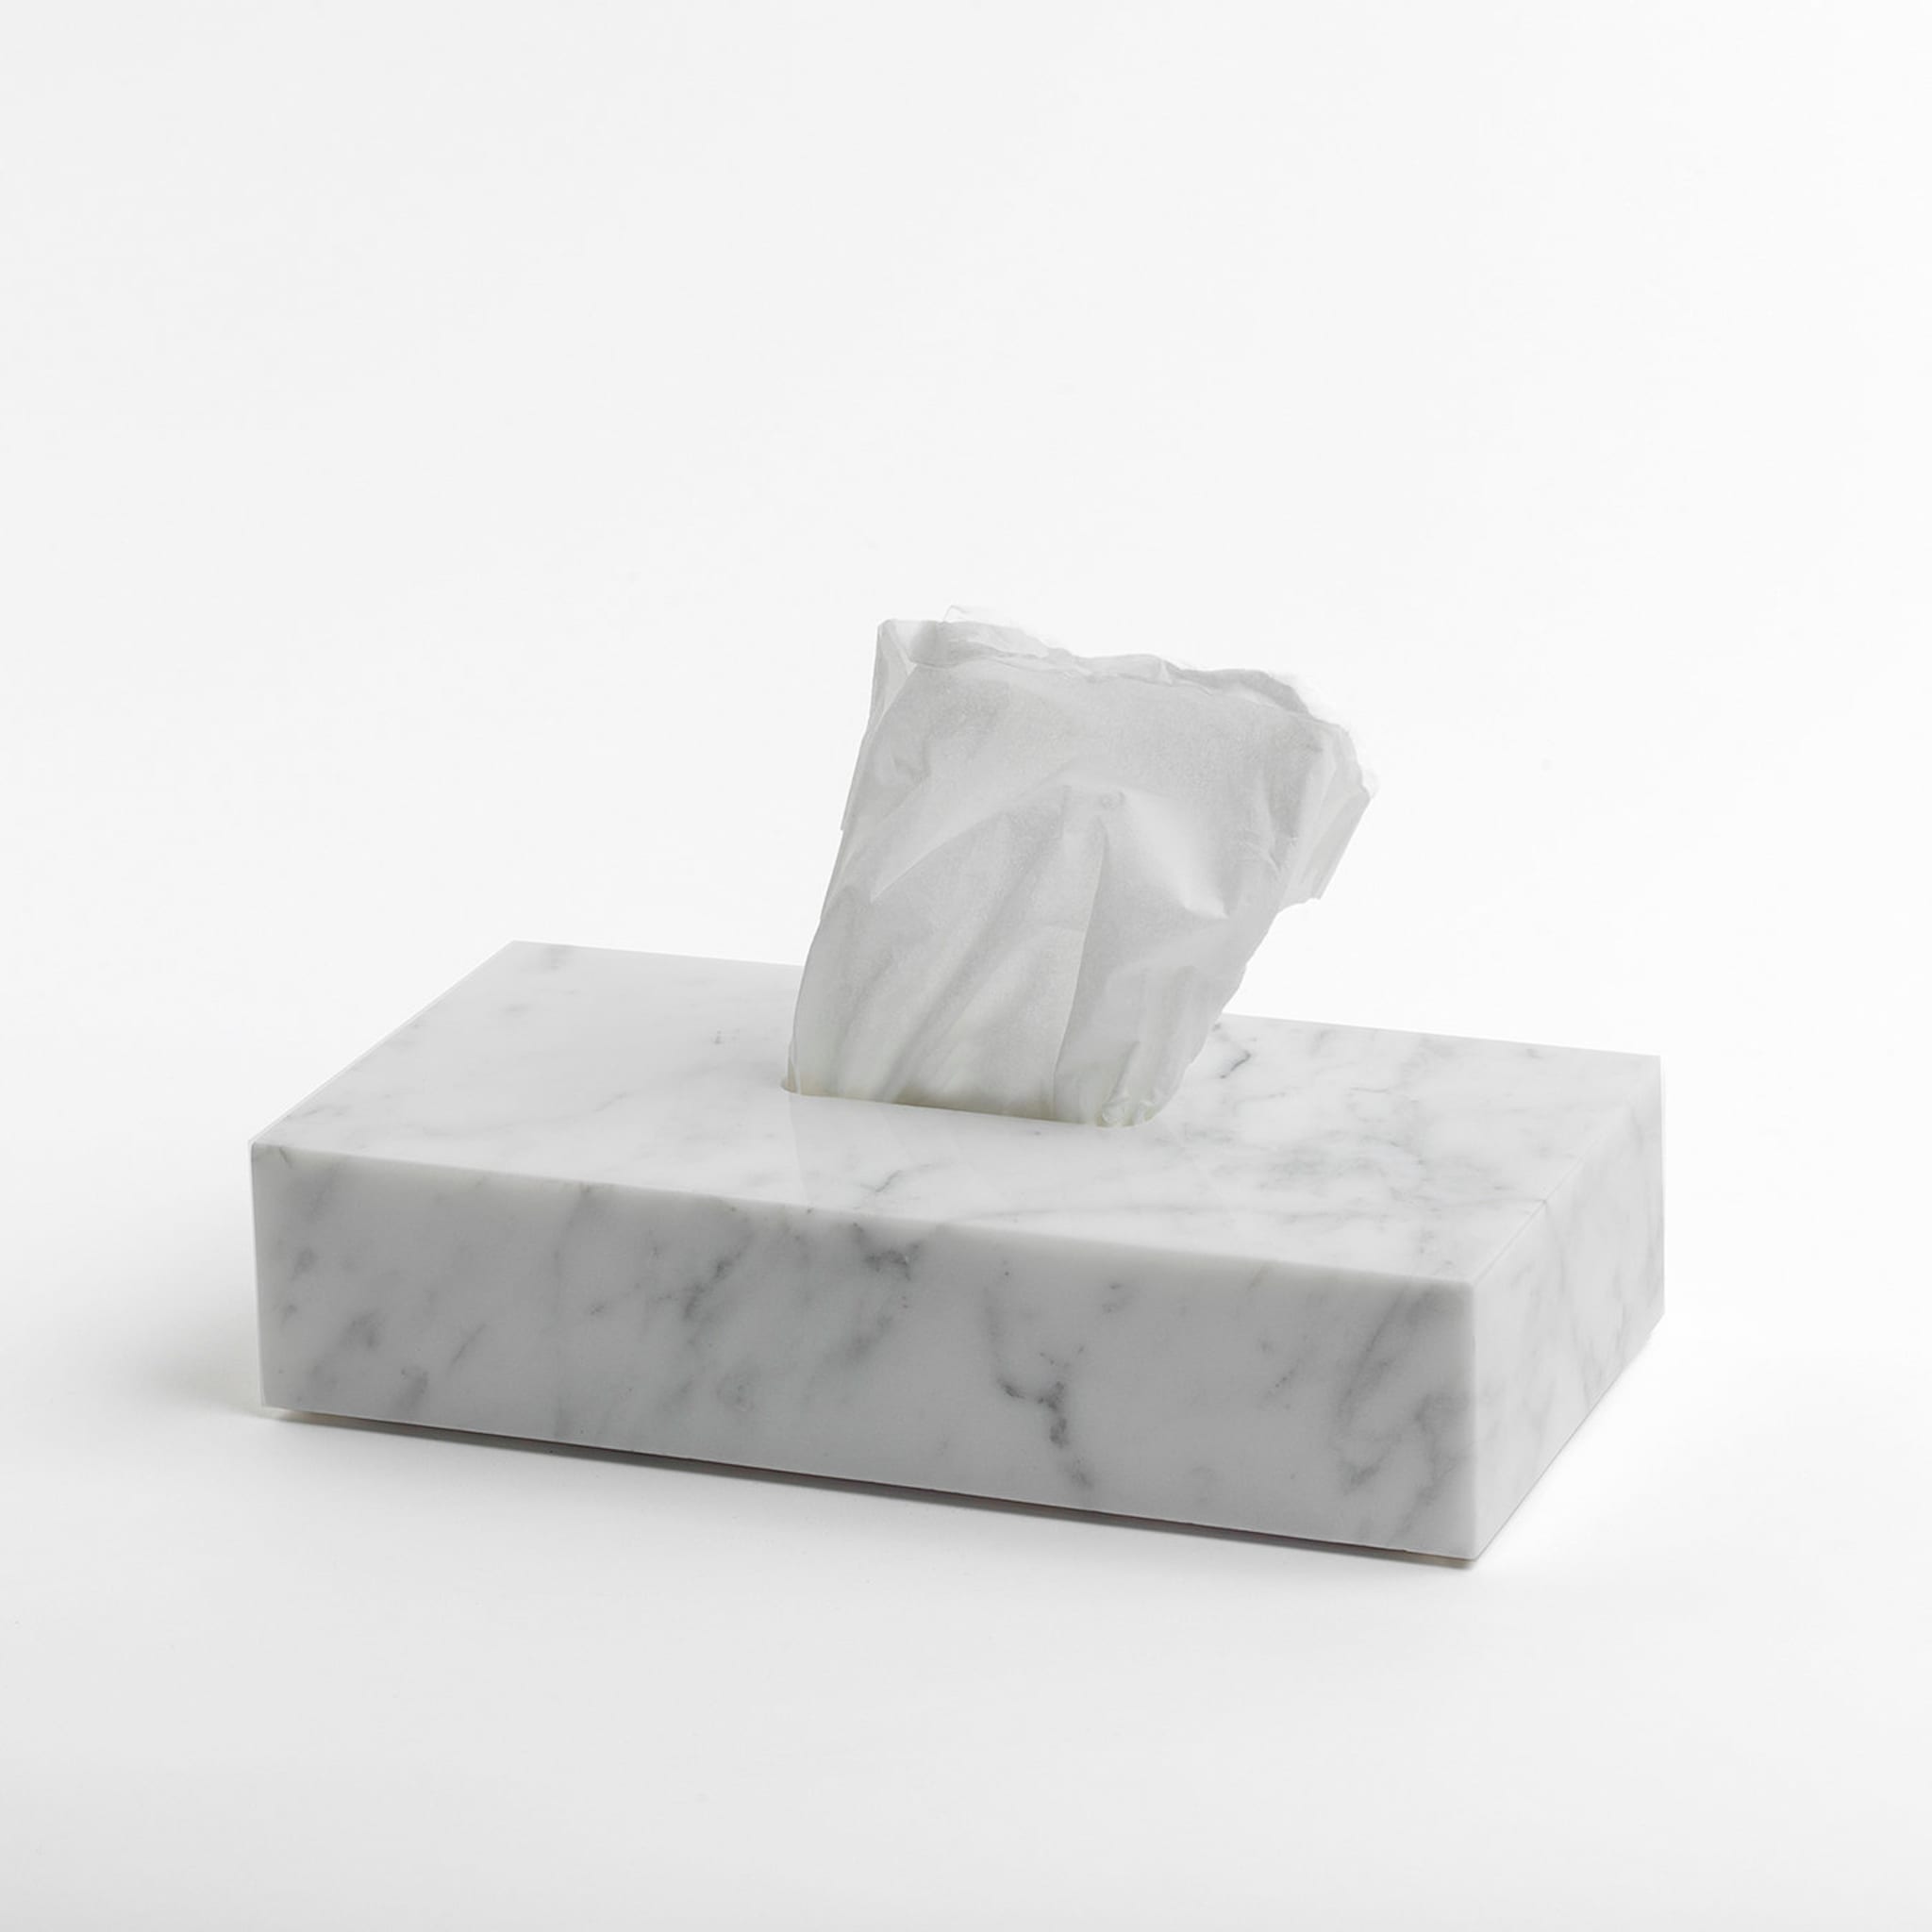 White Marble Tissue Box - Alternative view 1